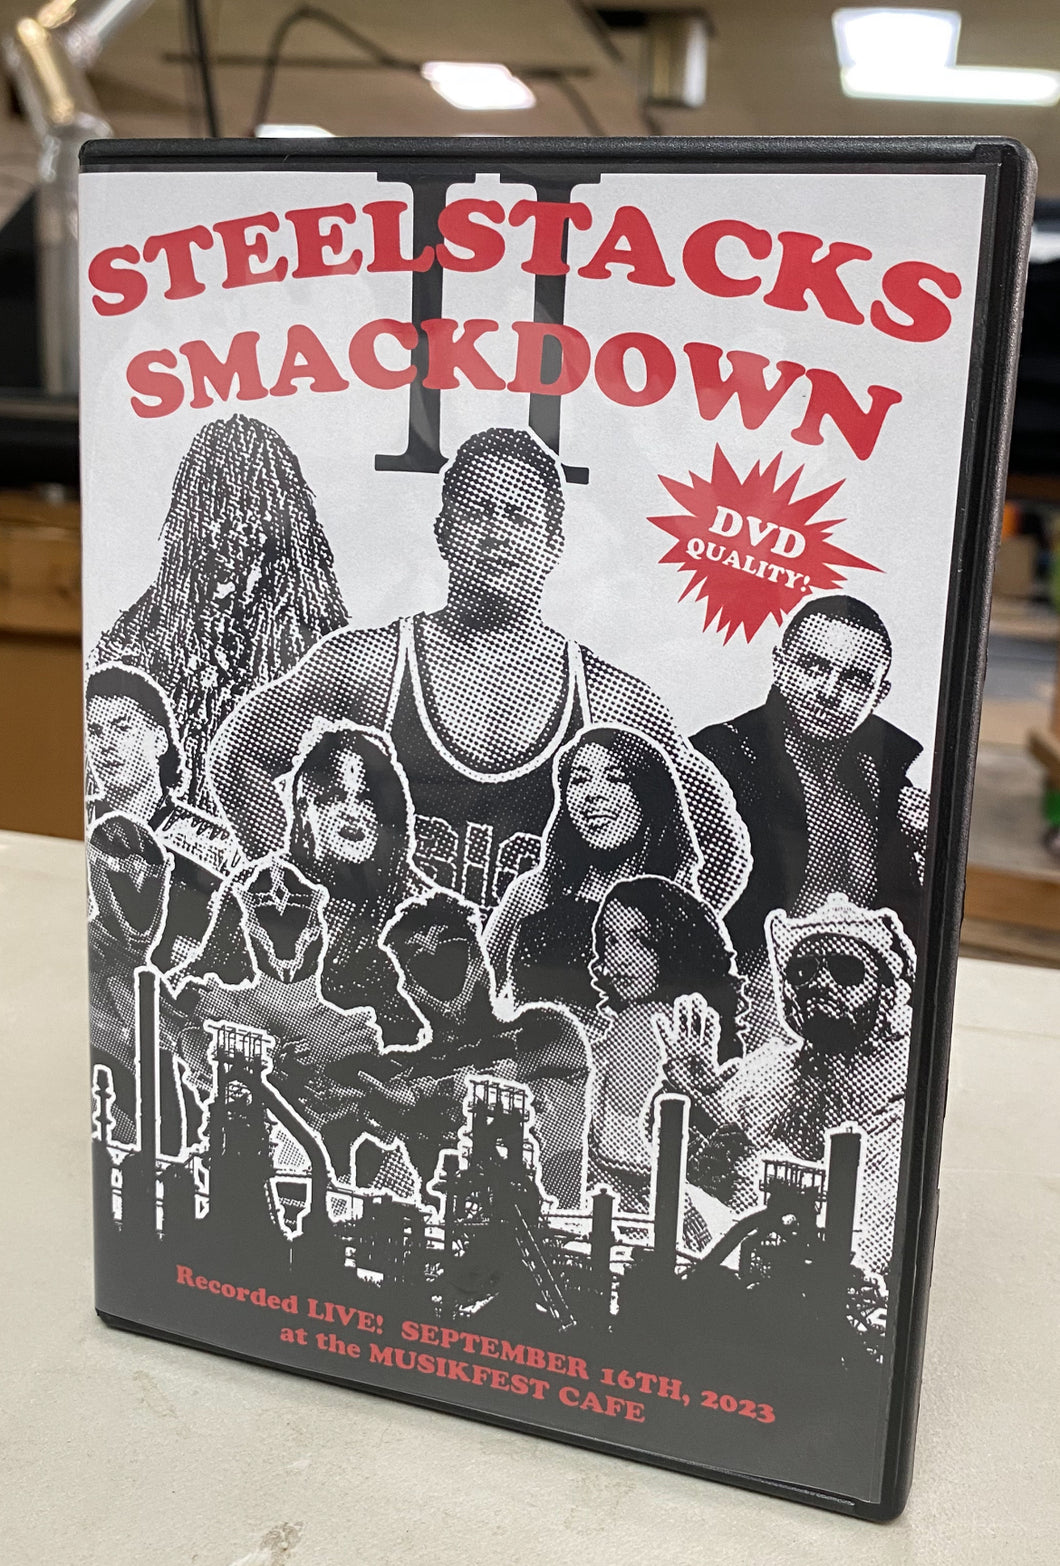 LVAC - Steelstacks Smackdown 2 DVD